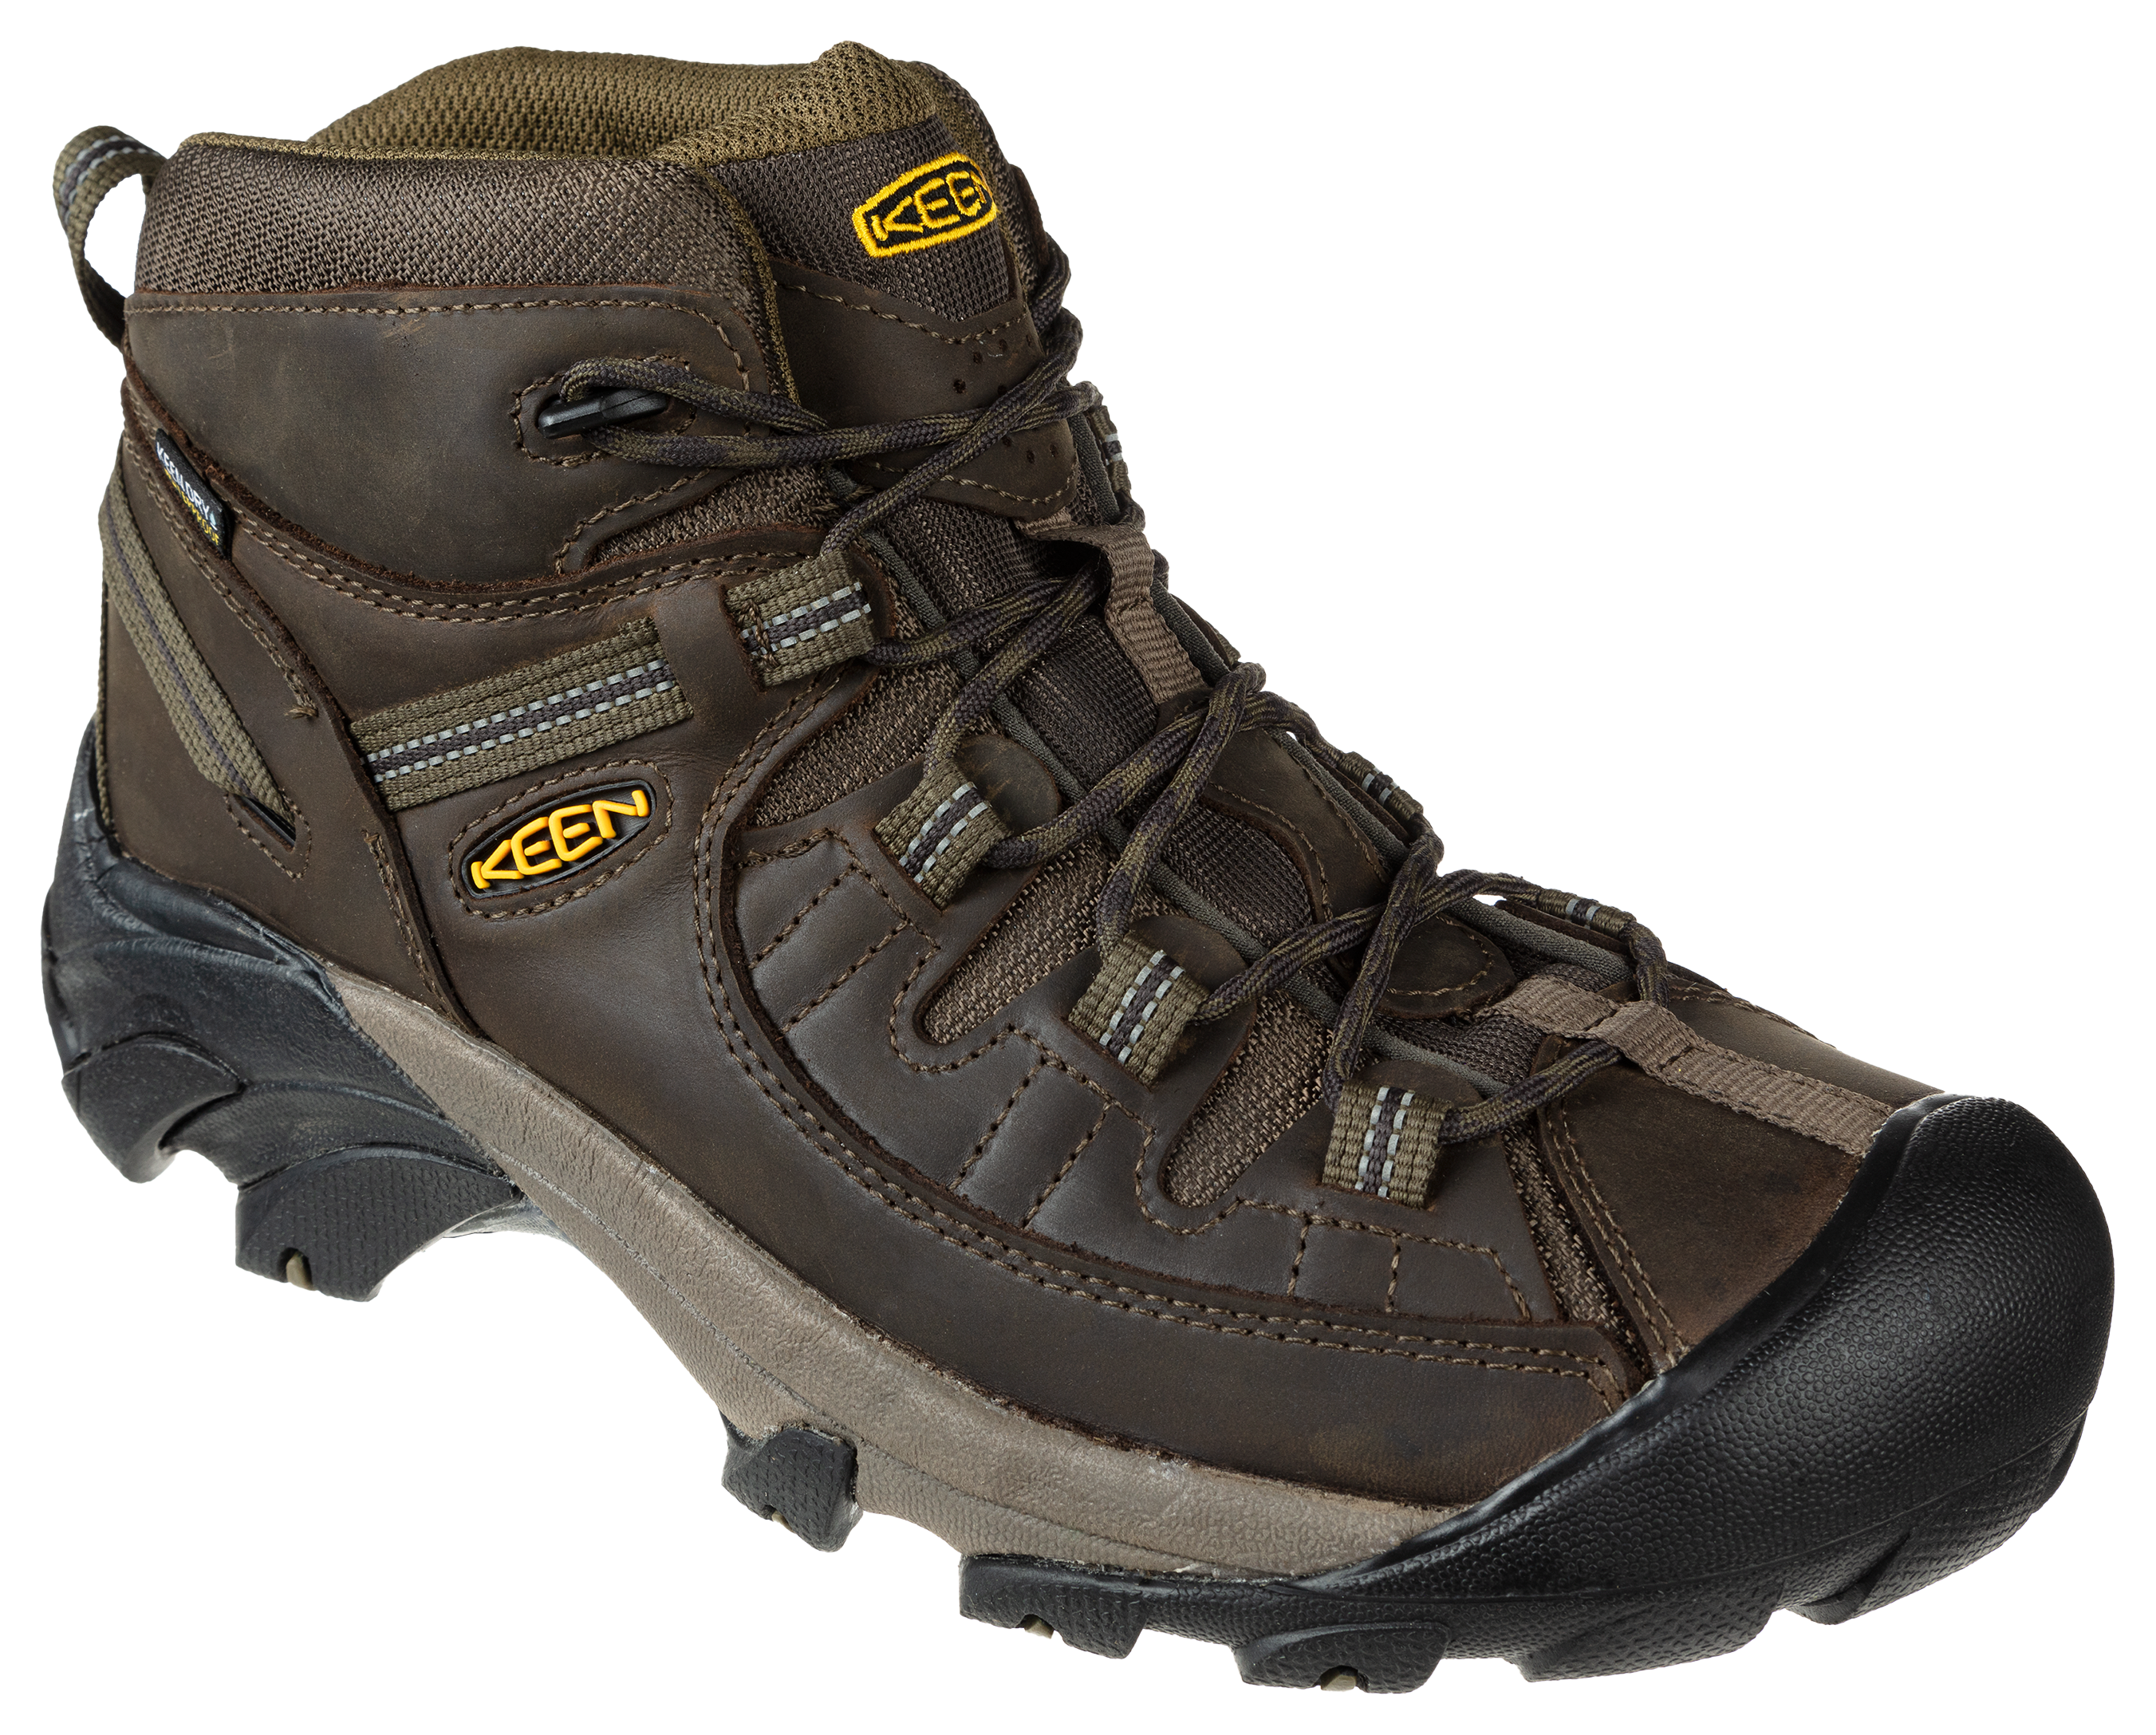 KEEN Targhee II Mid Waterproof Hiking Boots for Men - Canteen/Dark Olive - 11.5M